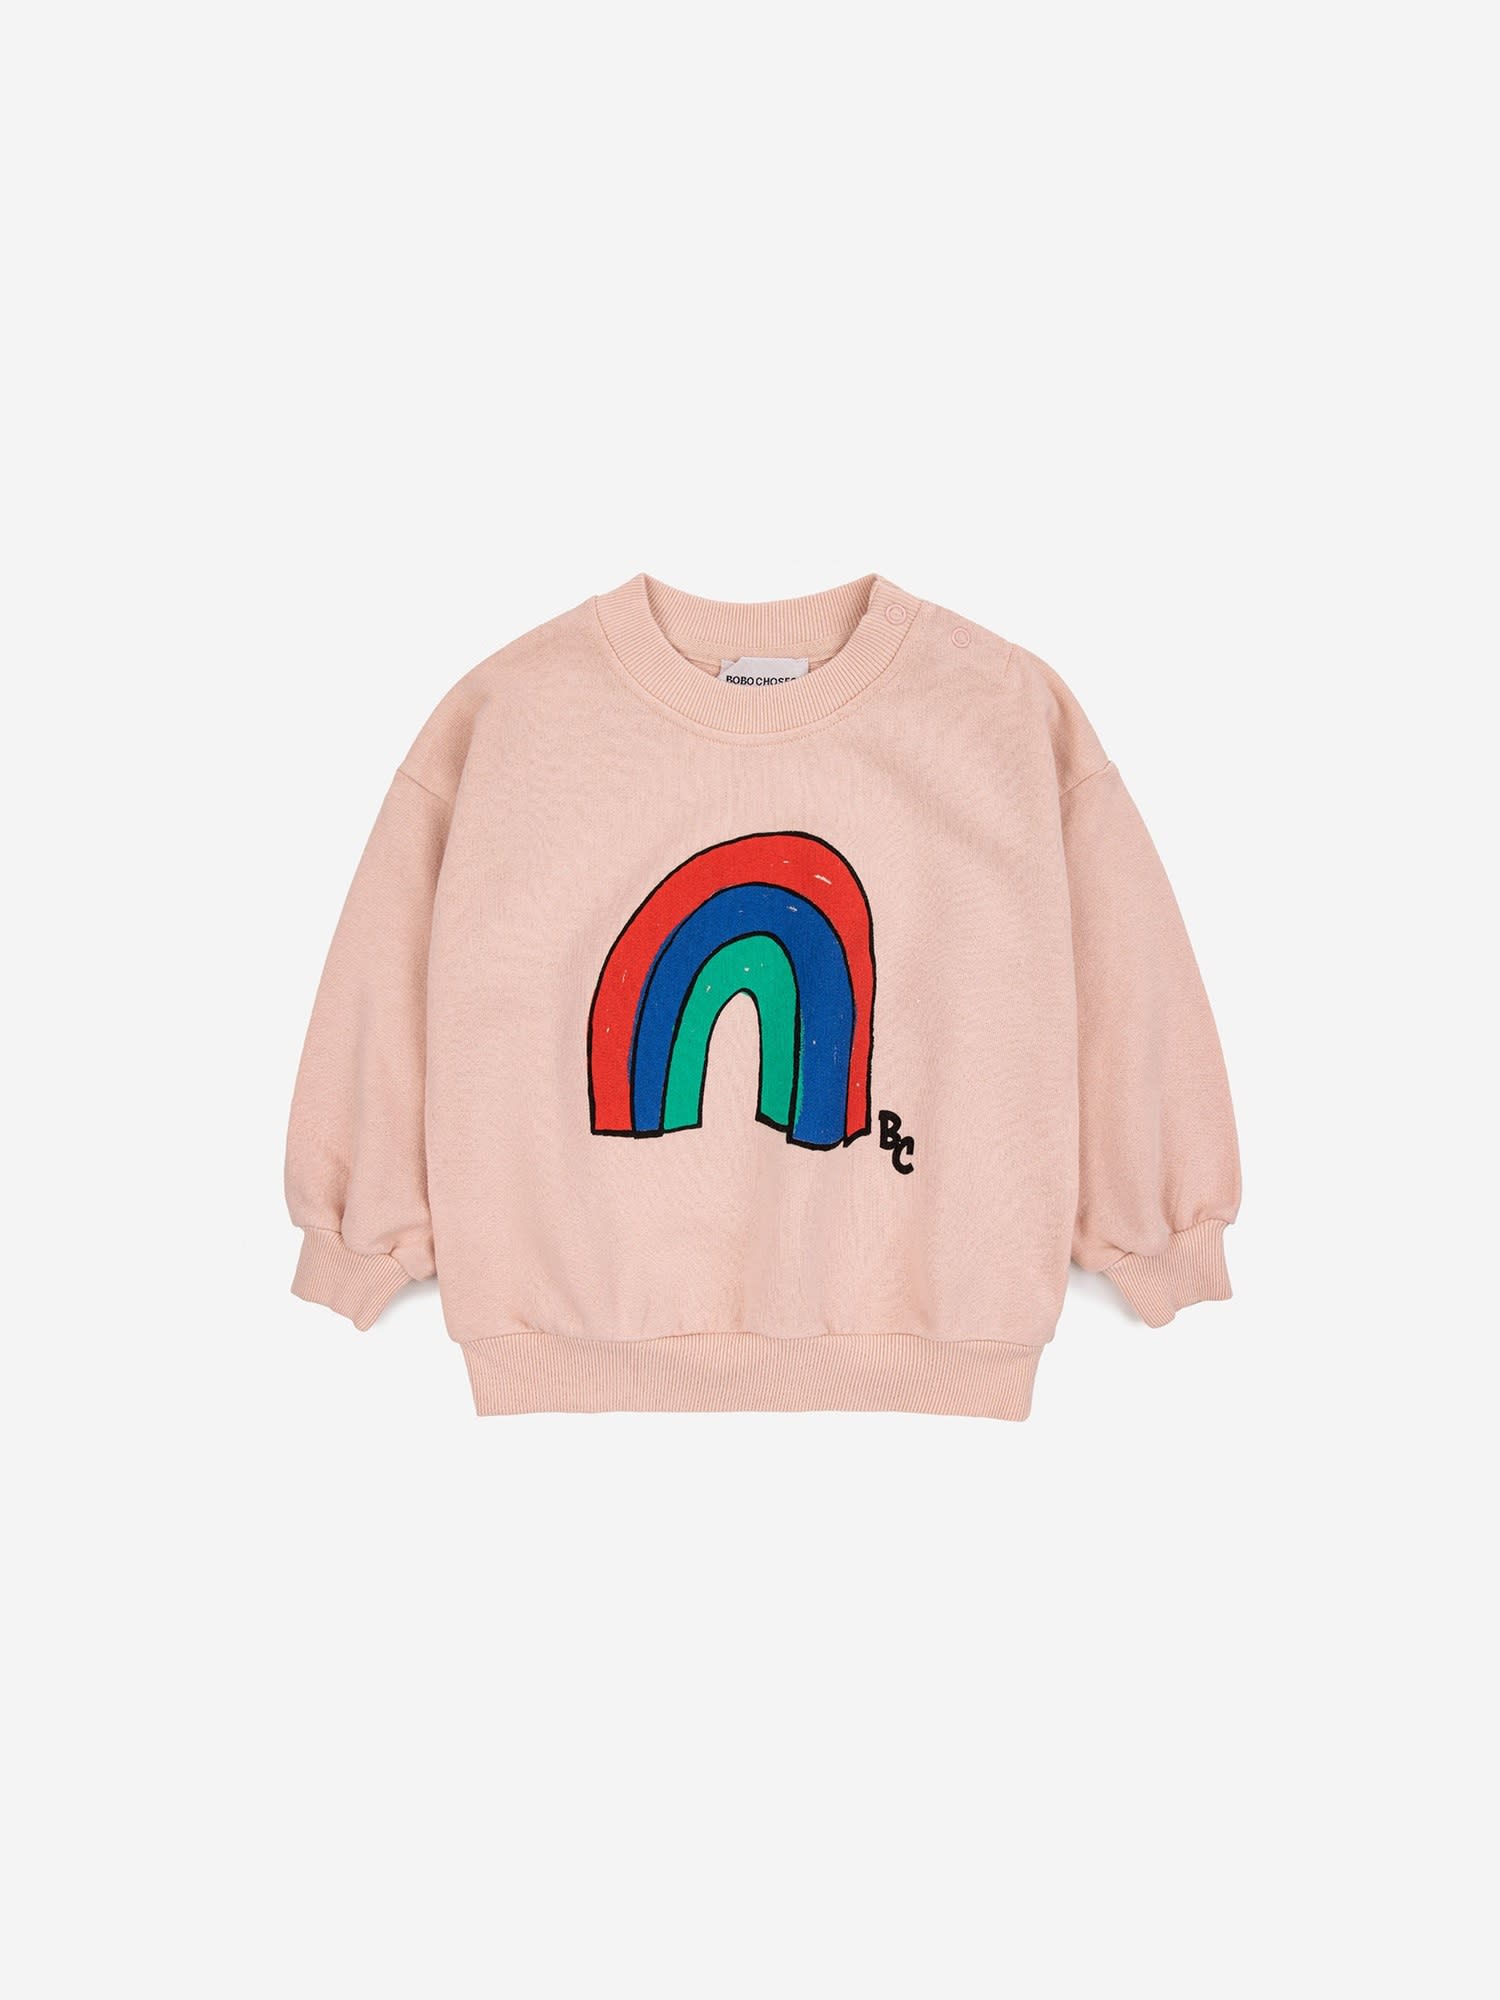 Shop Bobo Choses Pink Sweatshirt For Baby Girl With Rainbow Print